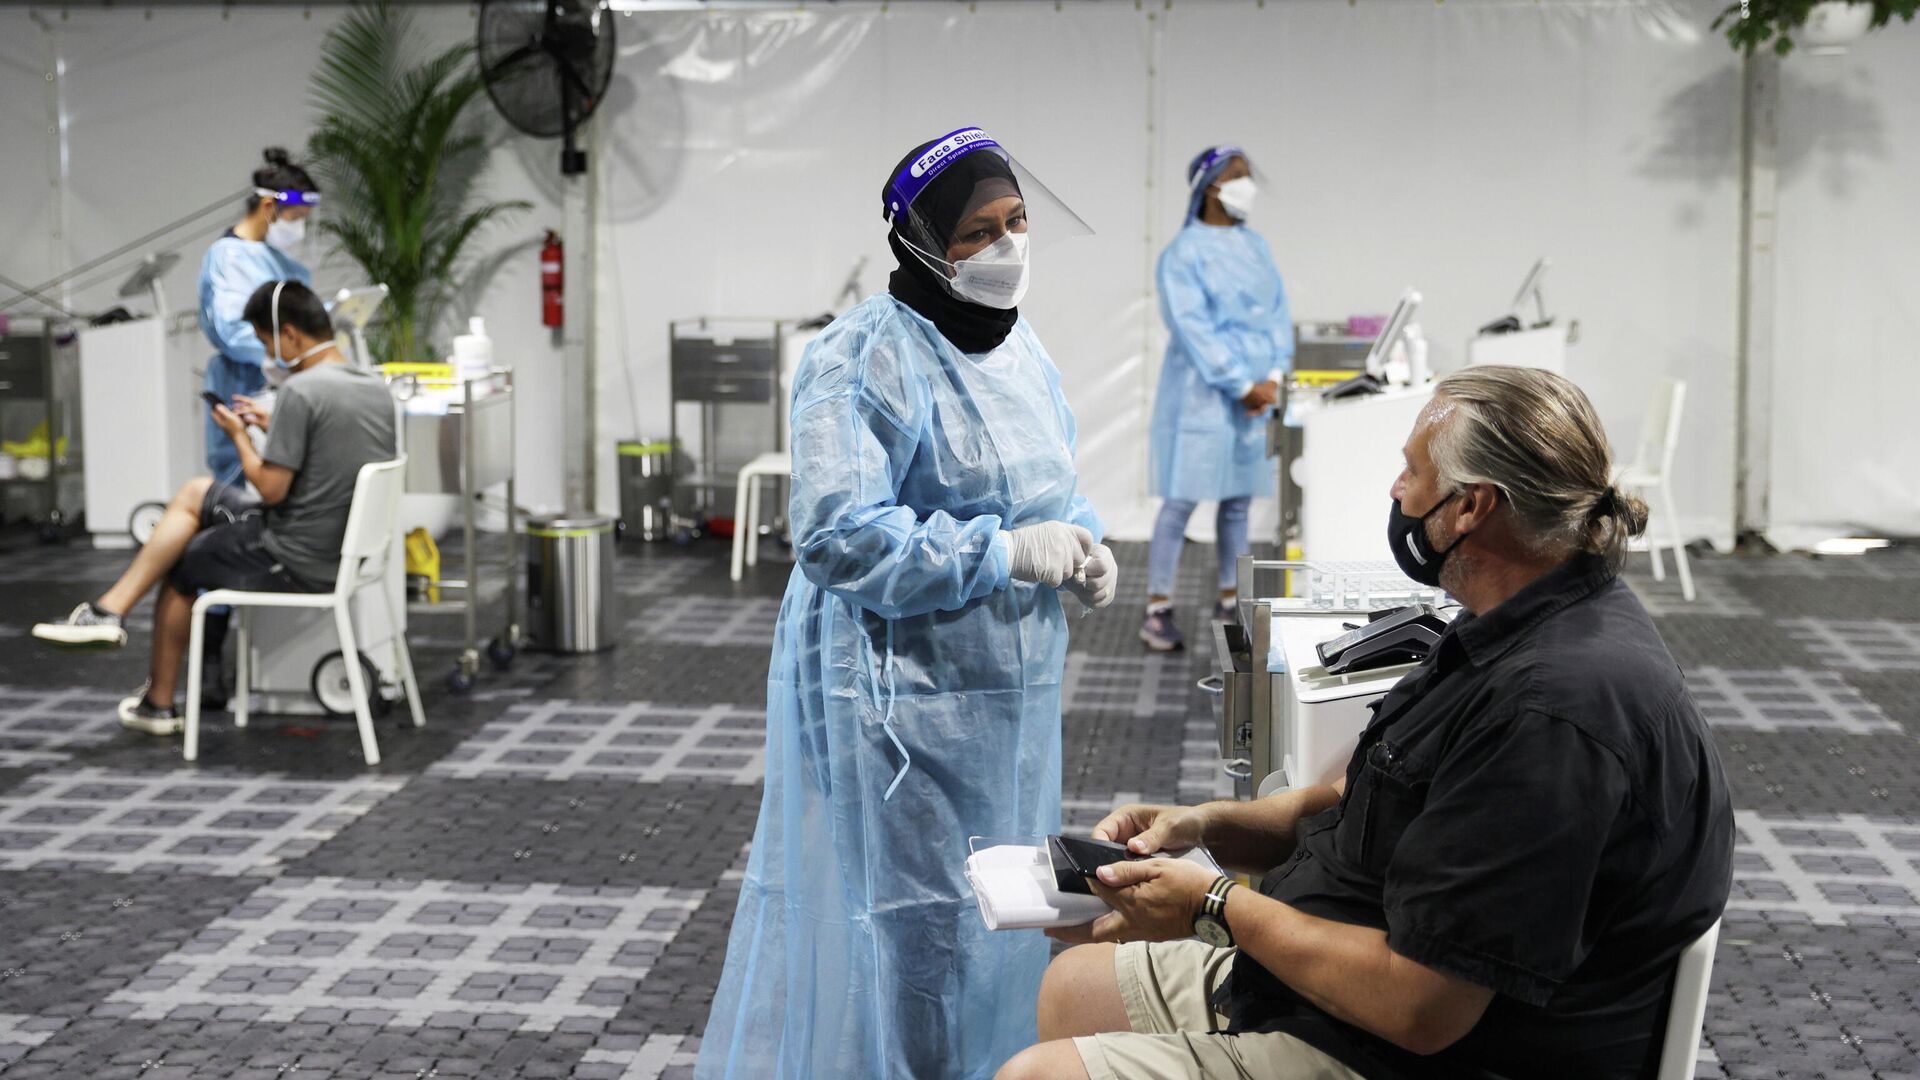 Путешественники проходят тесты на коронавирус (COVID-19) в аэропорту Сиднея - РИА Новости, 1920, 26.12.2021